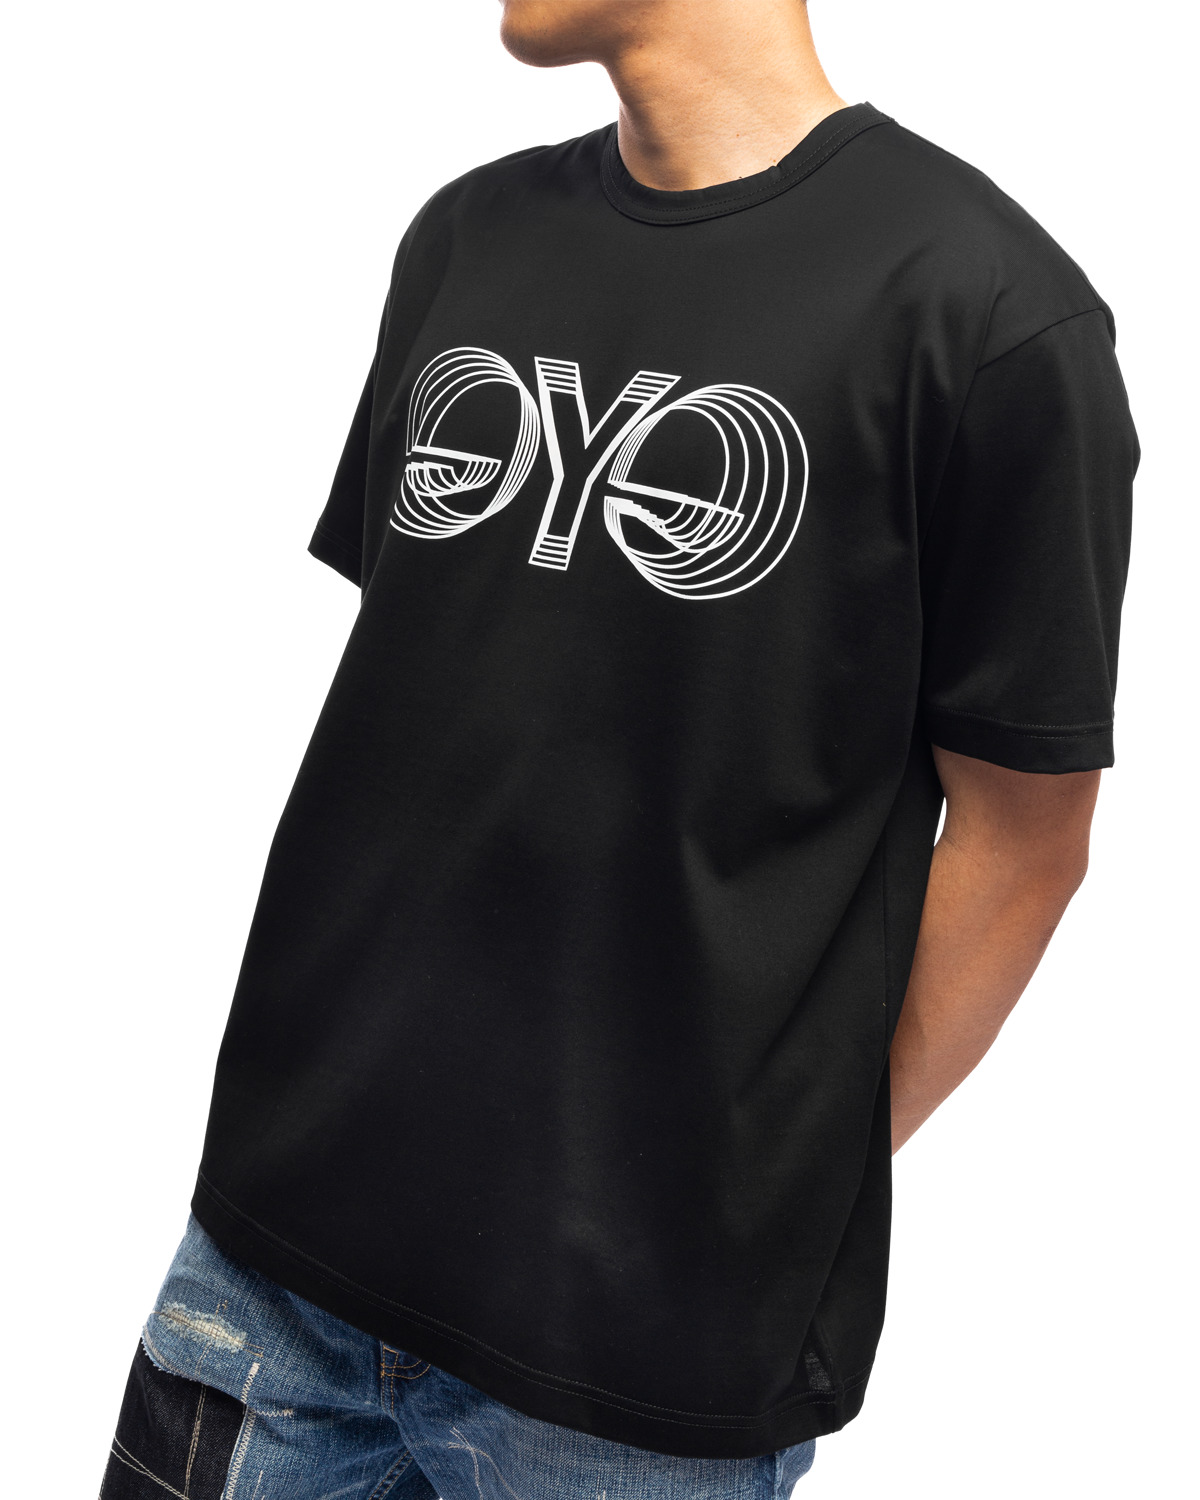 eYe Graphic T Shirt Black - 4